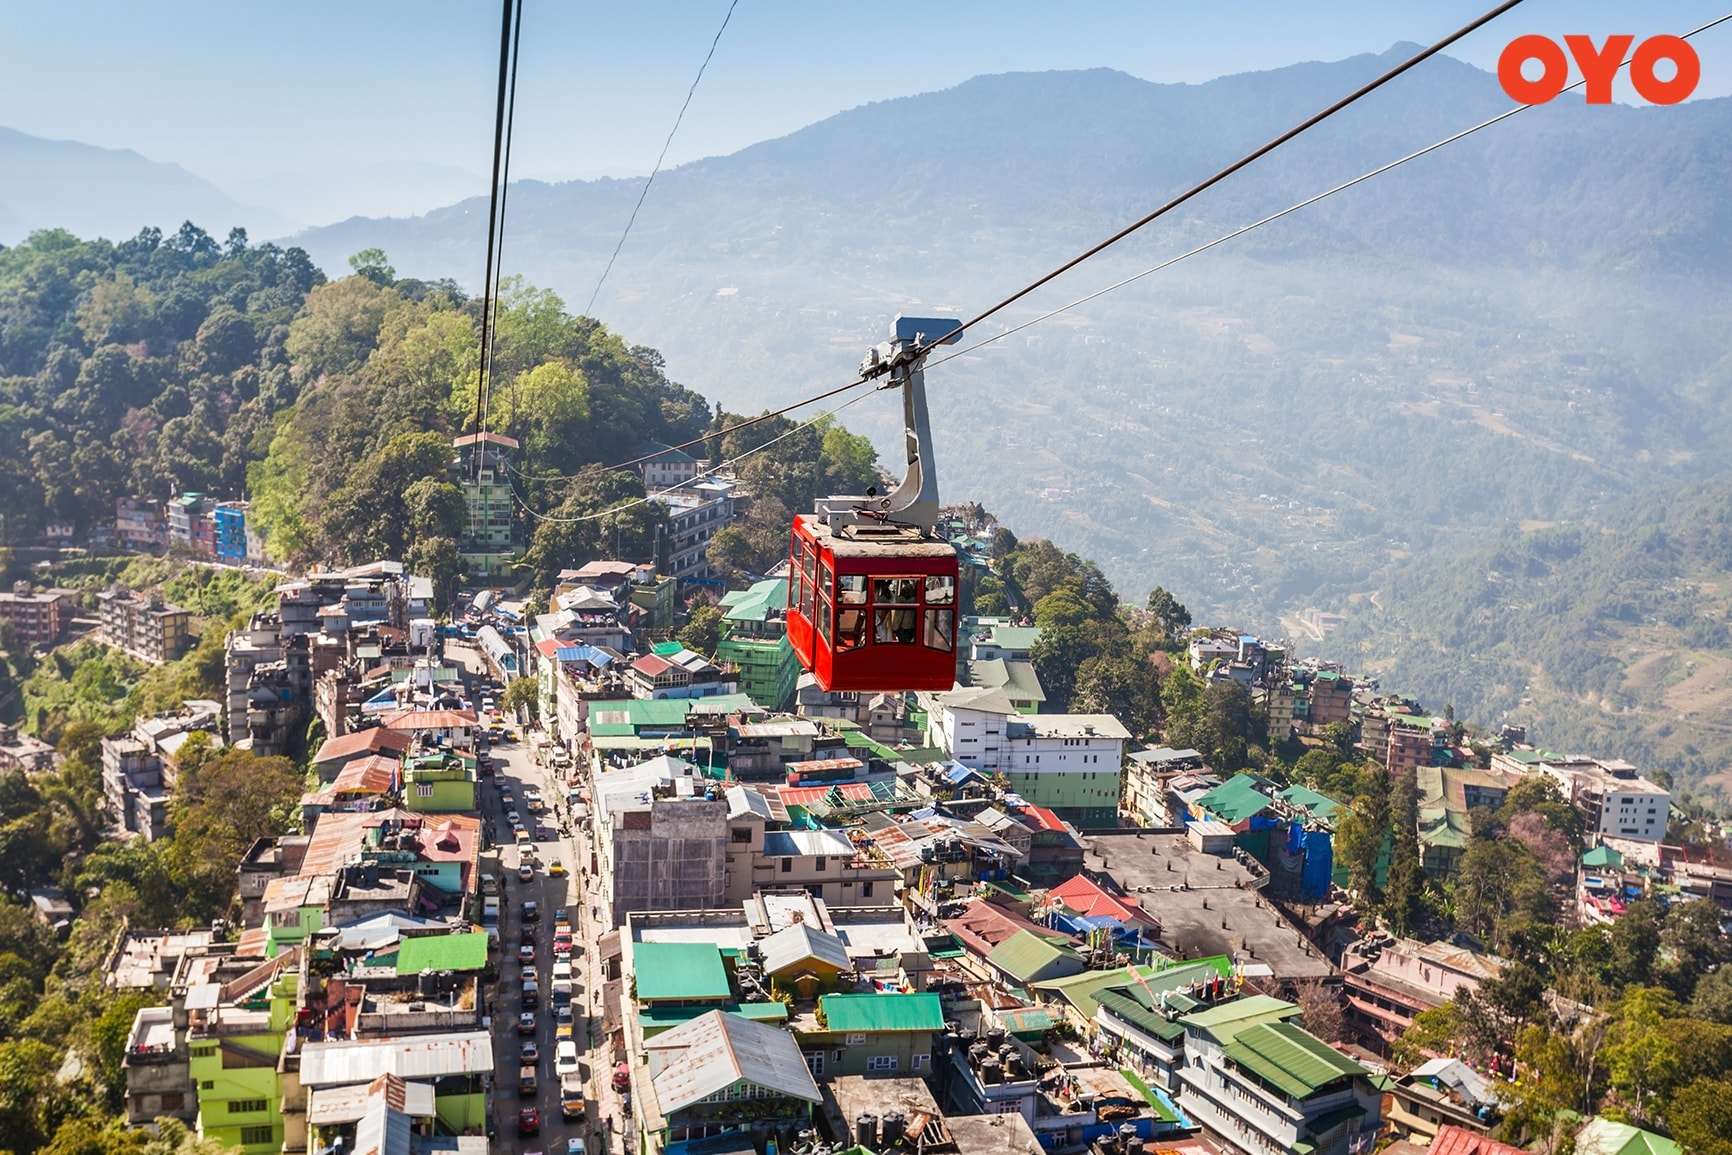 gangtok sikkim tourism news today